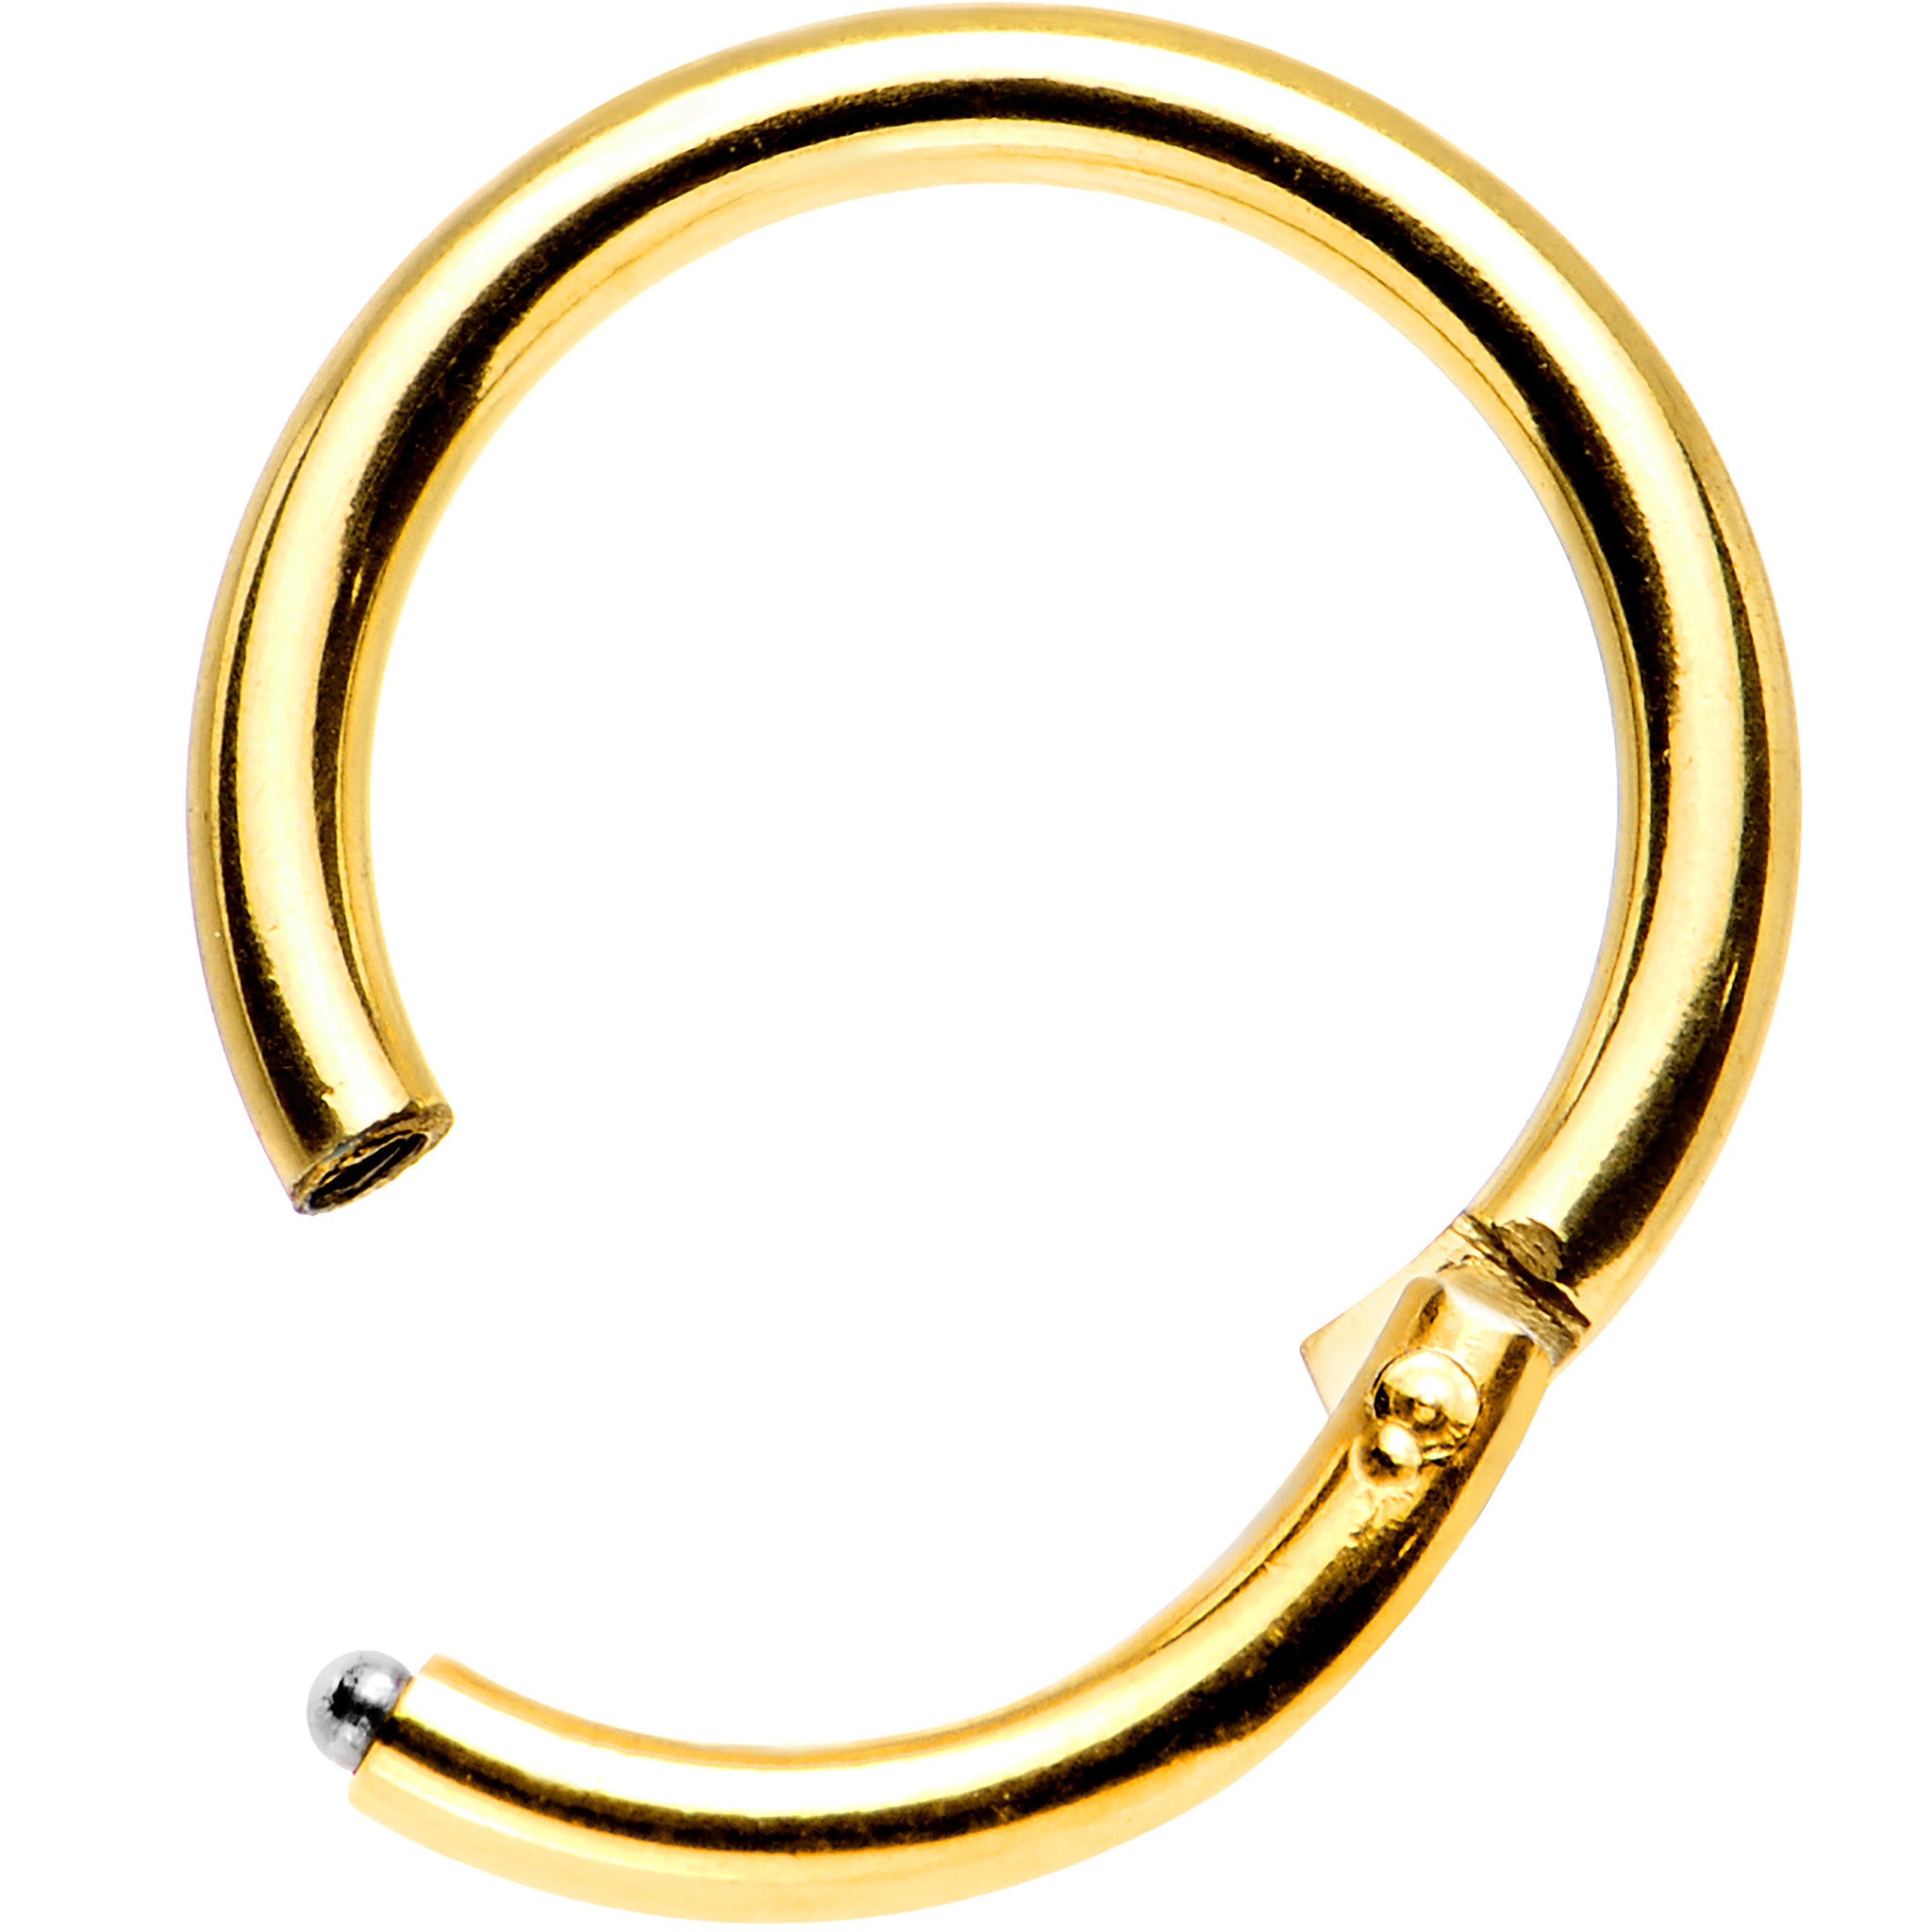 16 Gauge 5/16 Gold Anodized Titanium Hinged Segment Ring